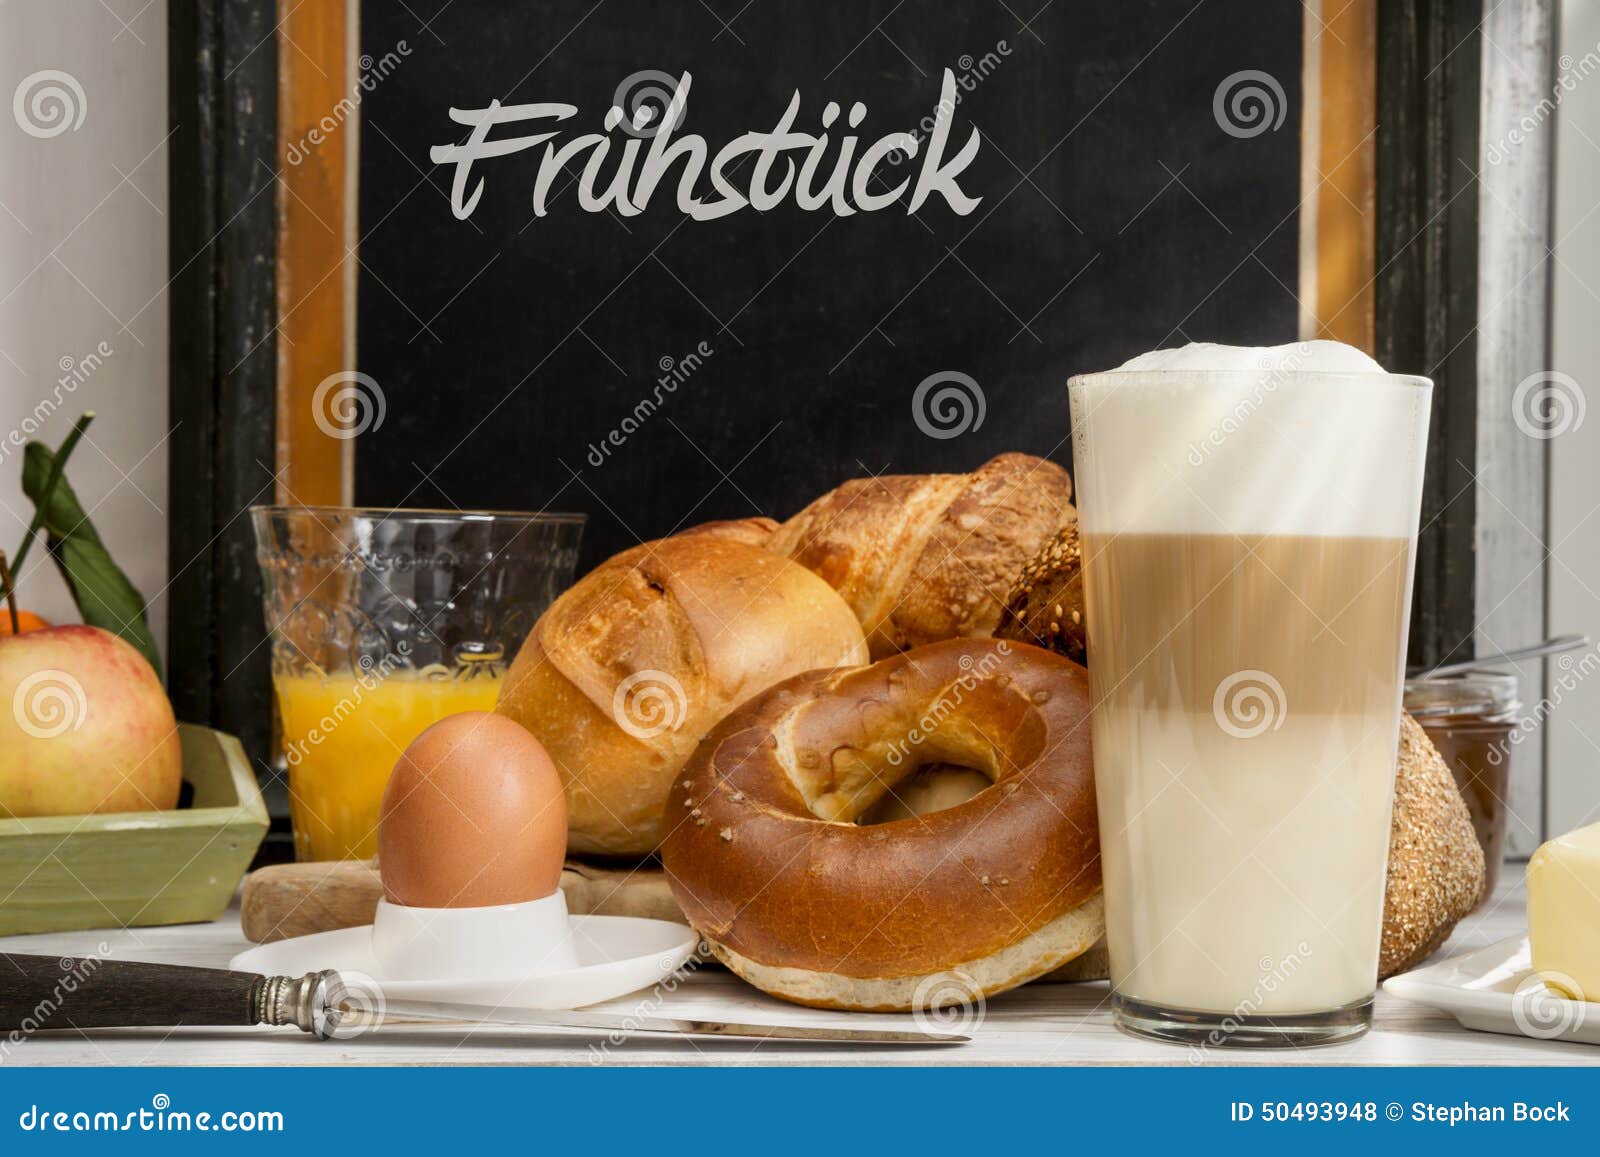 breakfast in cafe, bread, buns, egg, latte macchiato, orange juice